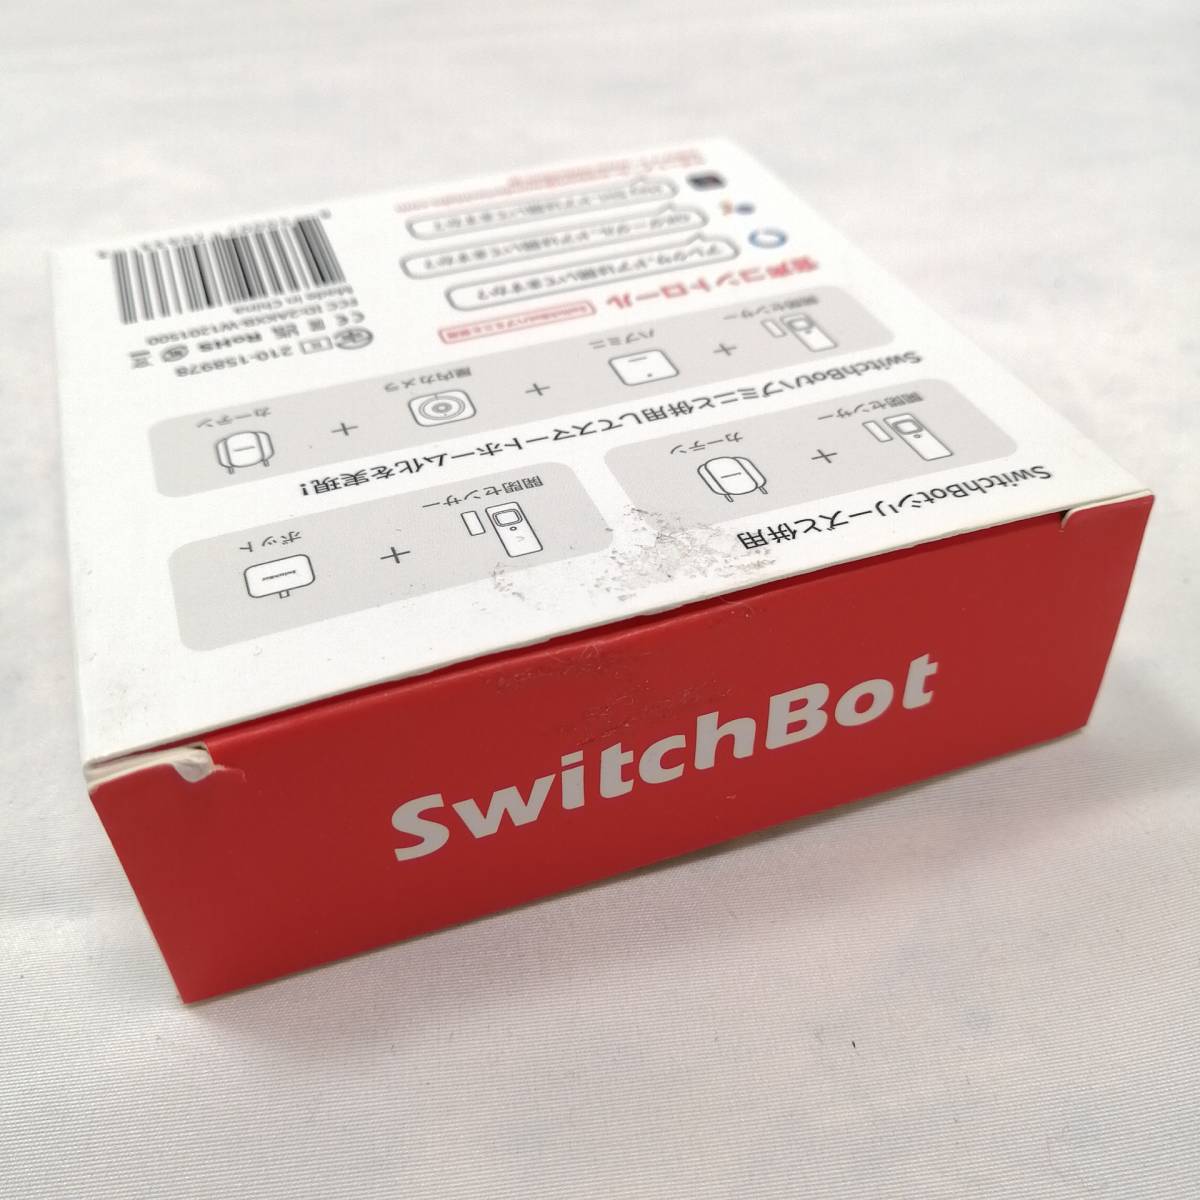 SwitchBot 開閉センサー スイッチボット セキュリティ スマートホーム 遠隔対応 取付簡単 スマホで確認 アラート通知【ジャンク】a7565_画像4